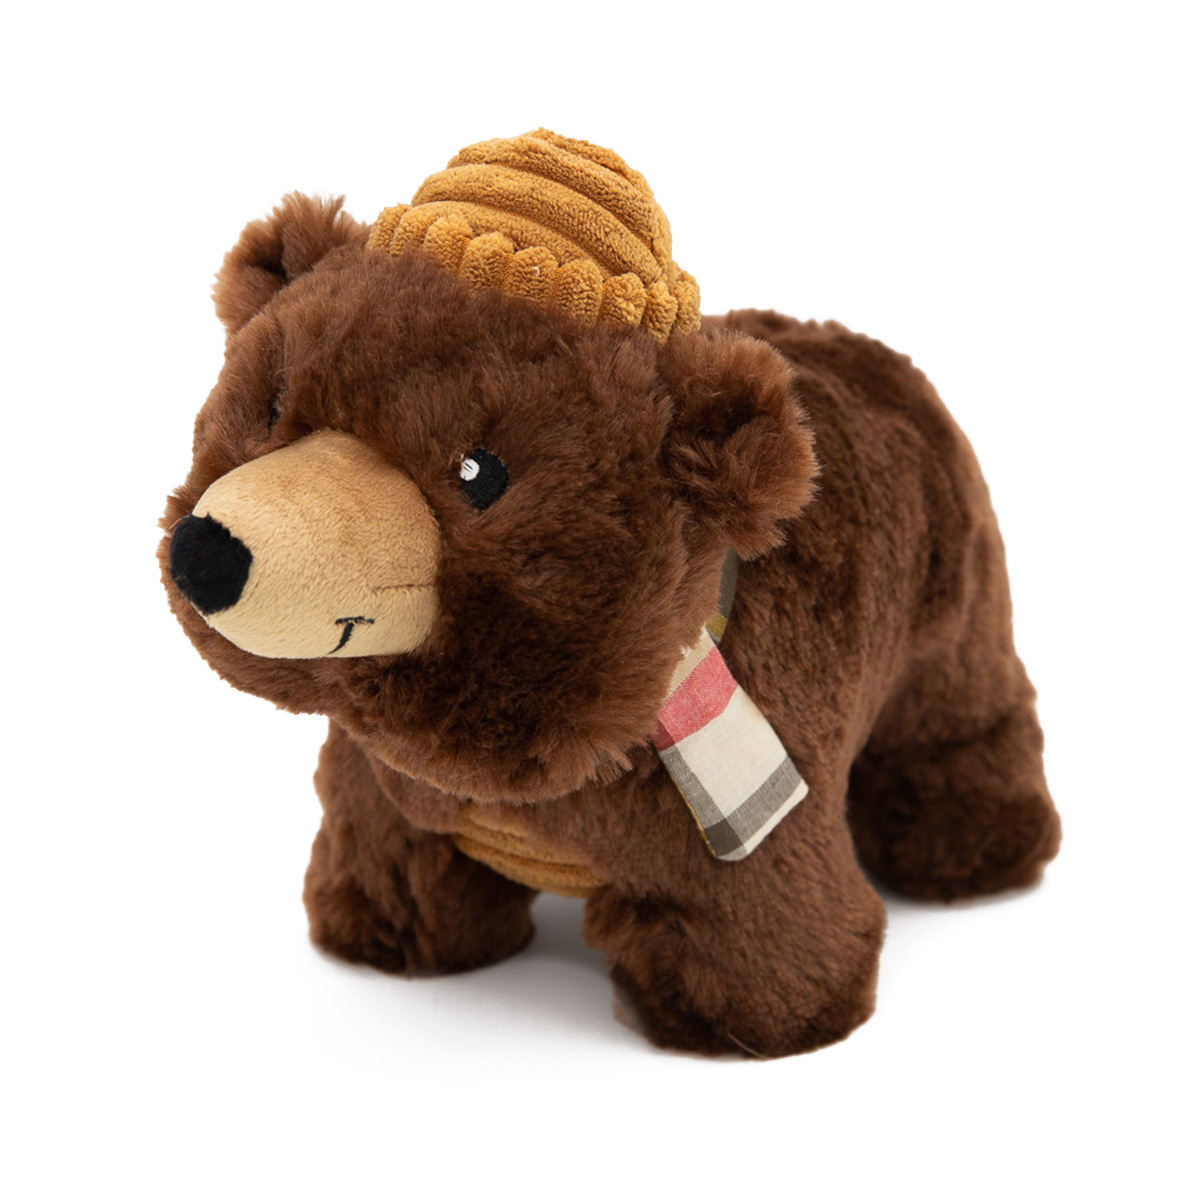 ZippyPaws Grunterz Bear Plush Dog Toy.